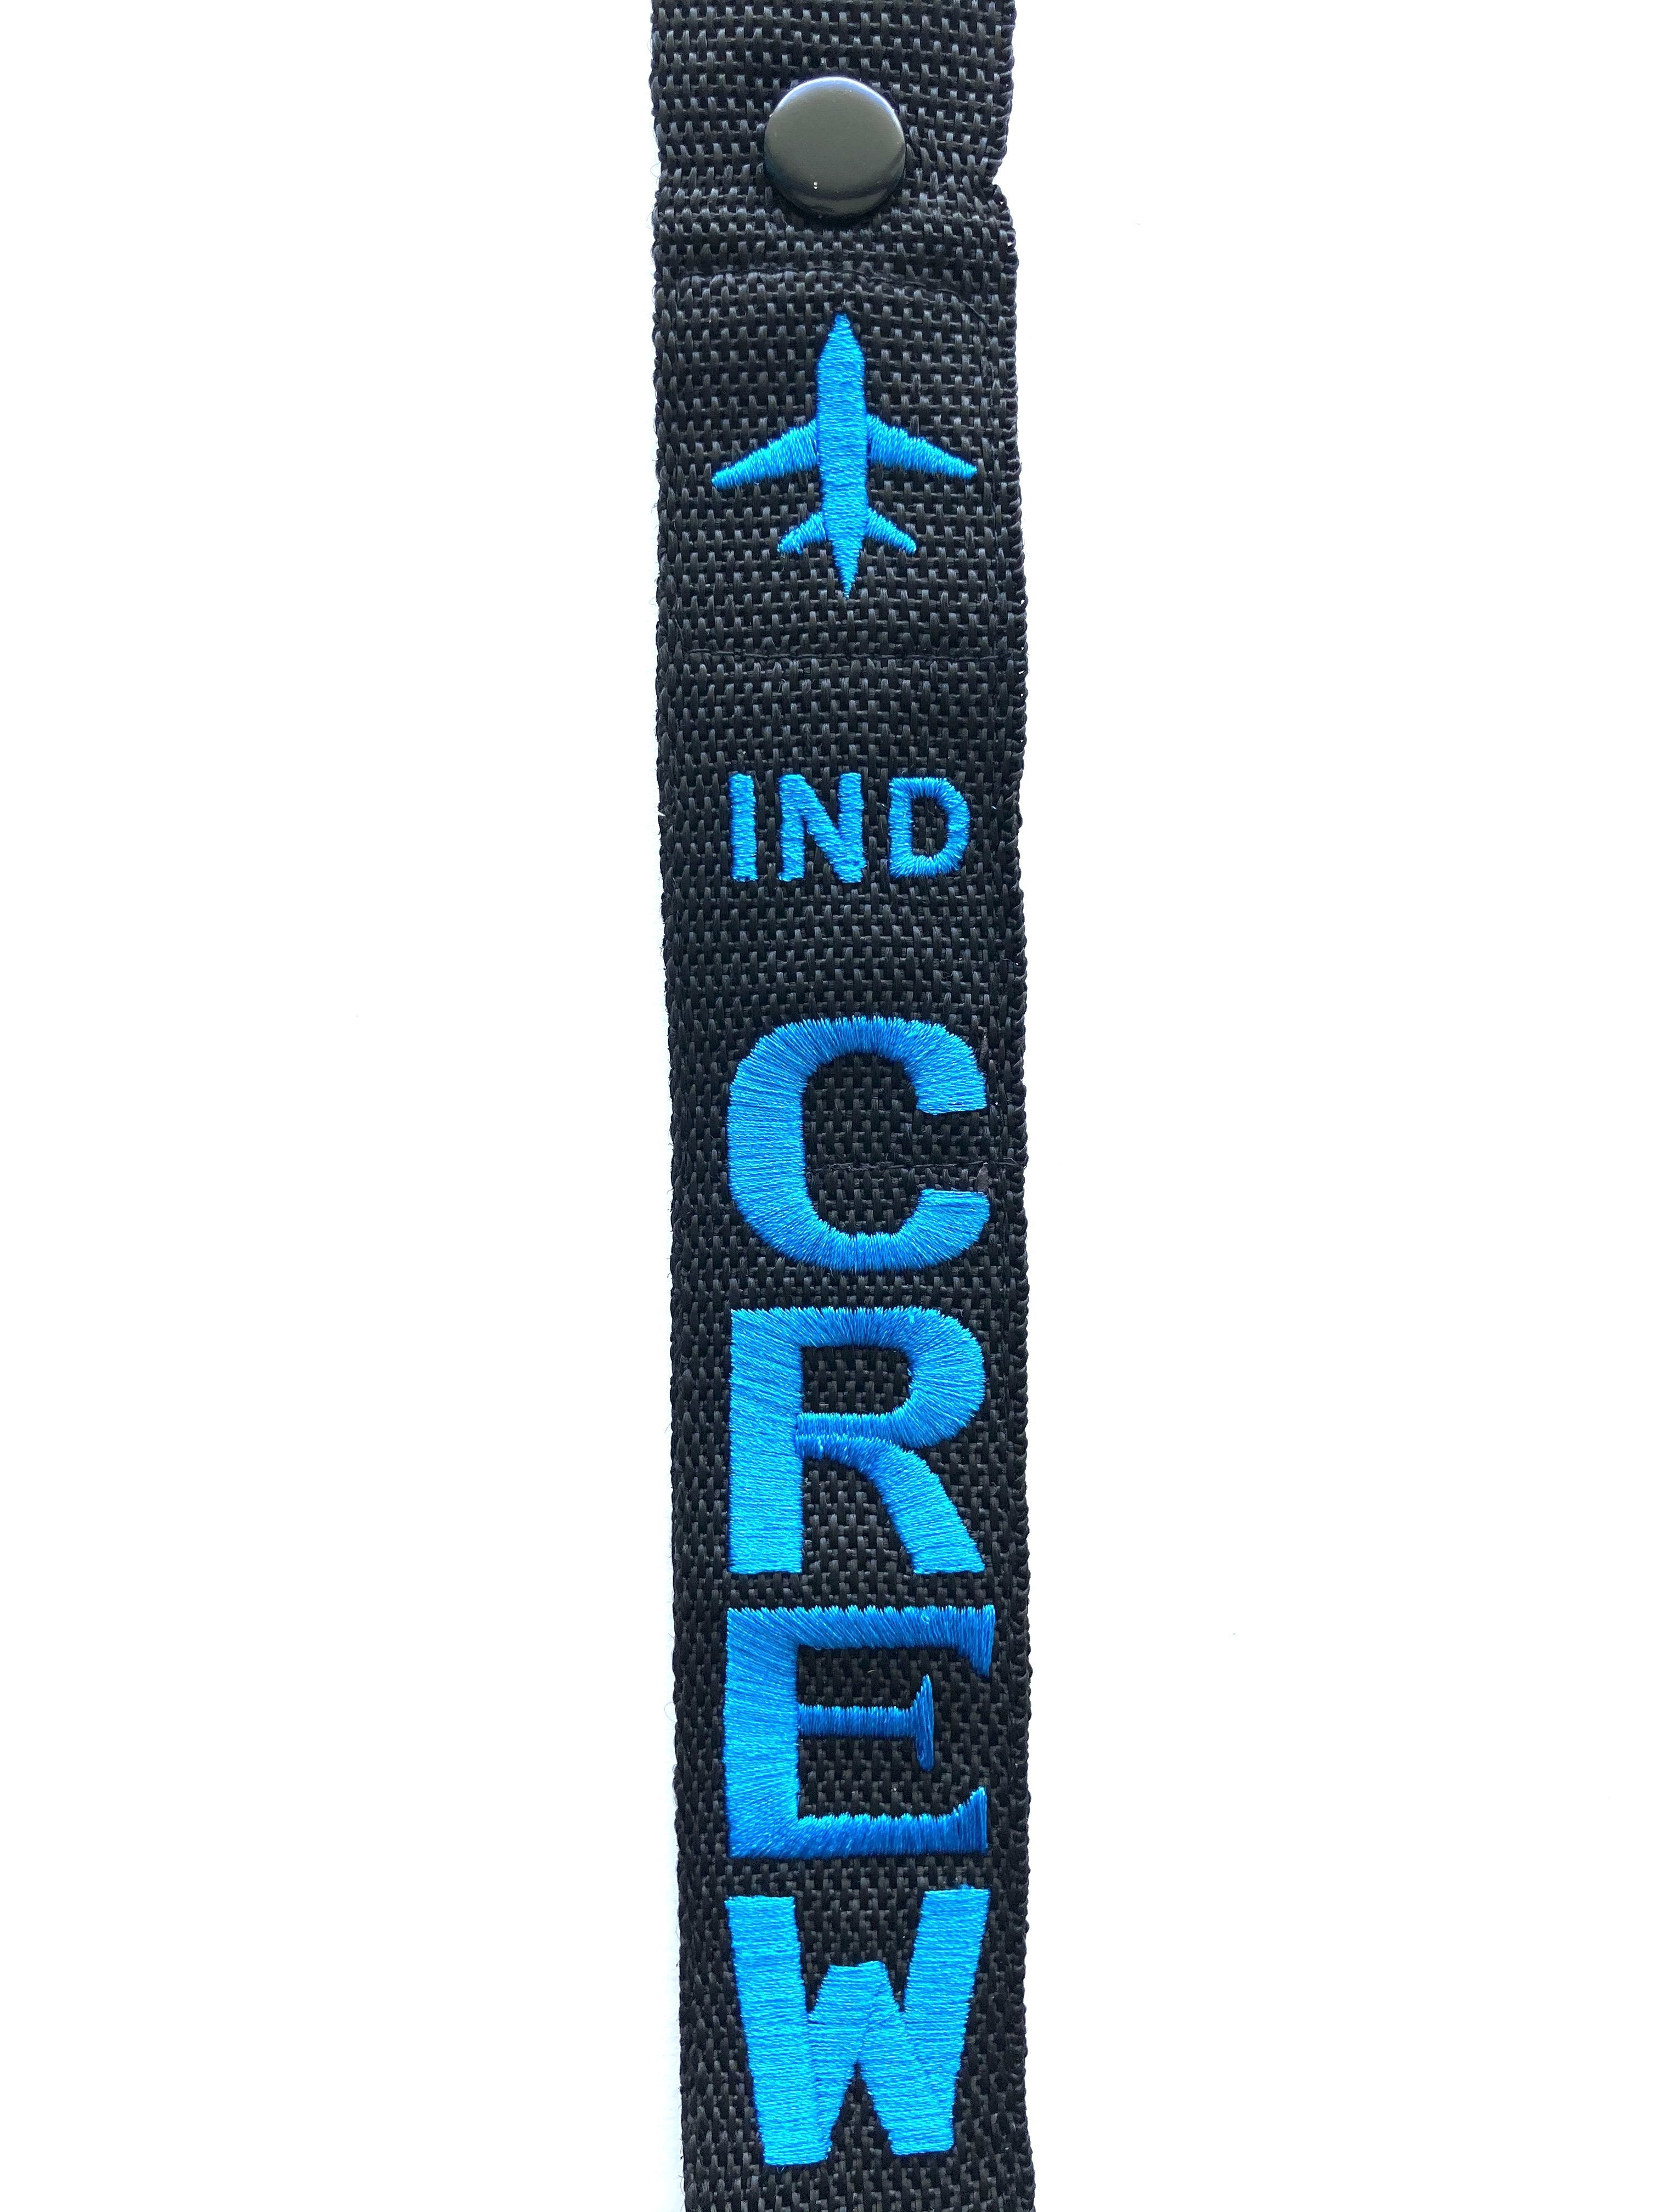 CREW Luggage Tag - IND Blue